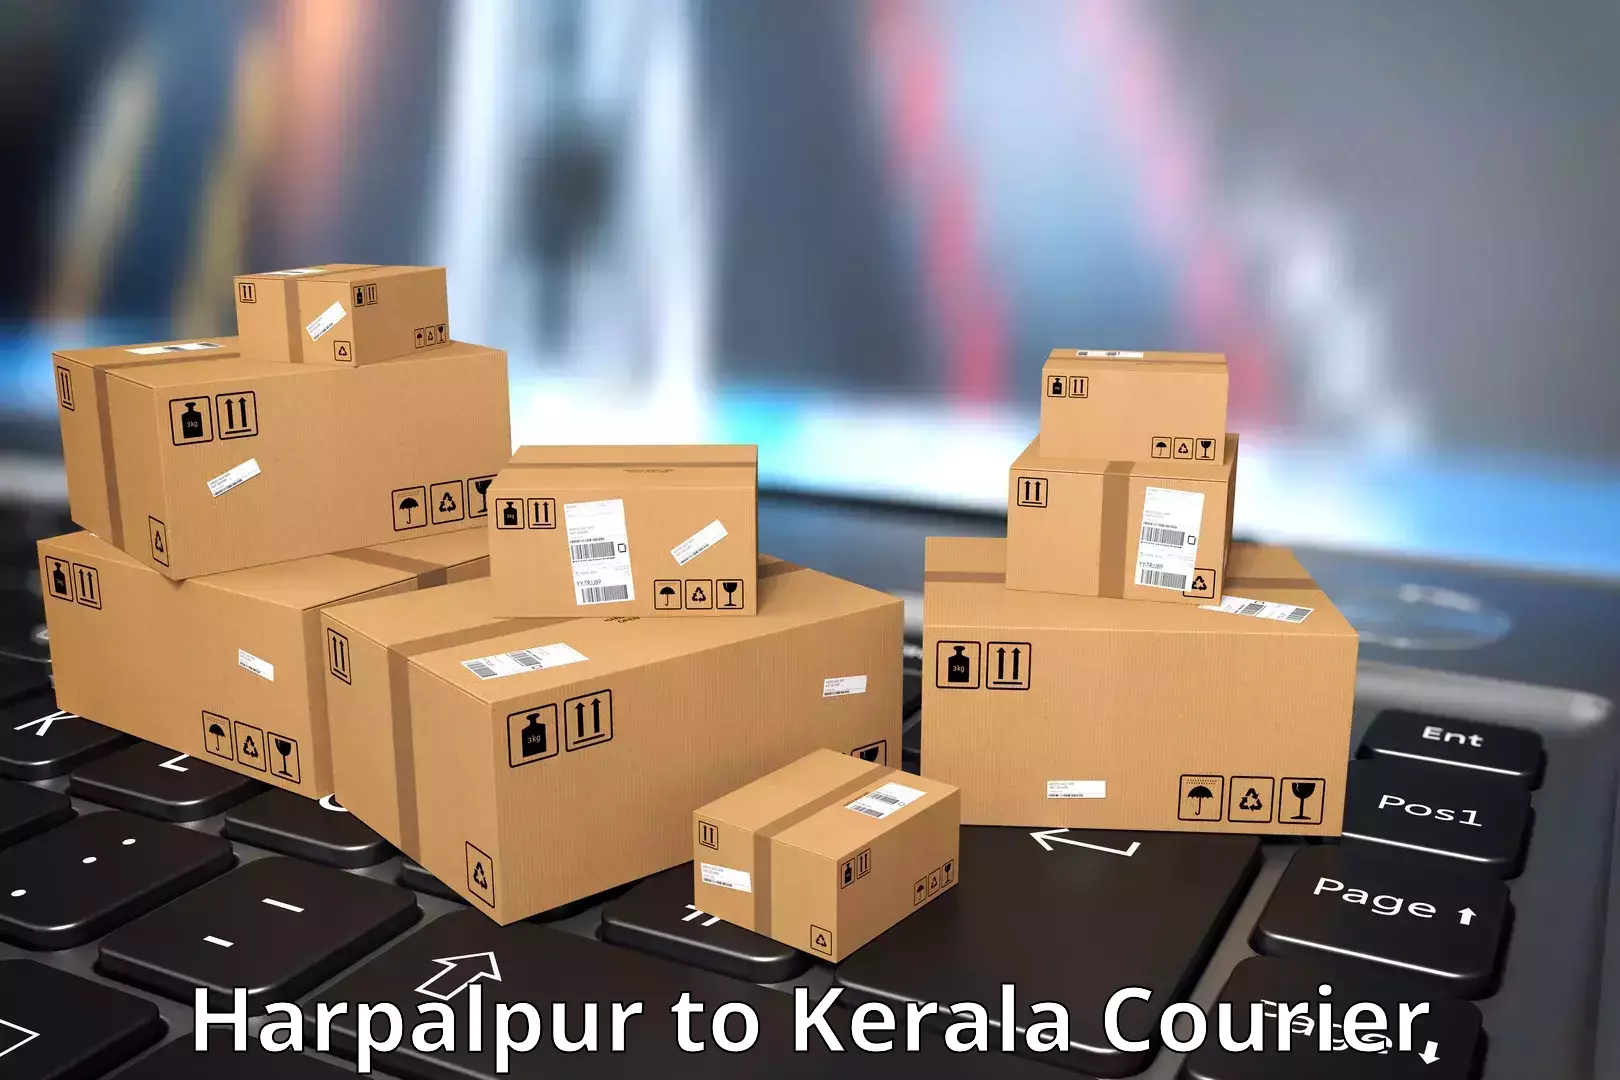 Next day courier Harpalpur to Cochin Port Kochi